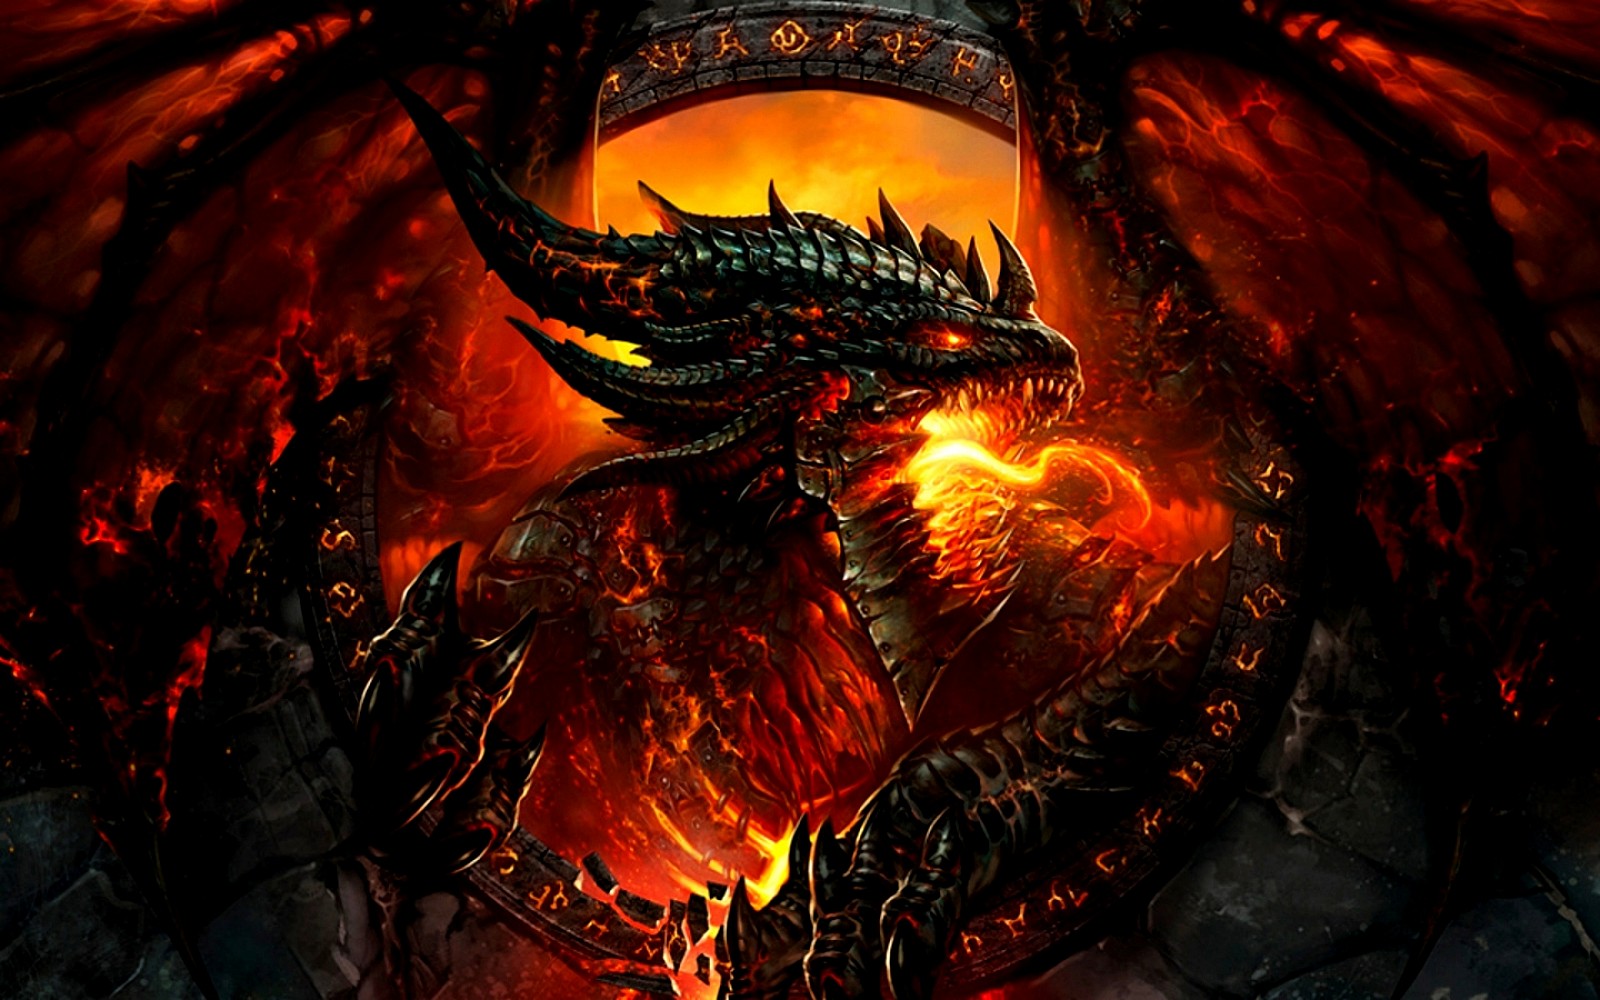 Fire-Dragon-club-of-awesomeness-36943155-1600-1000.jpg